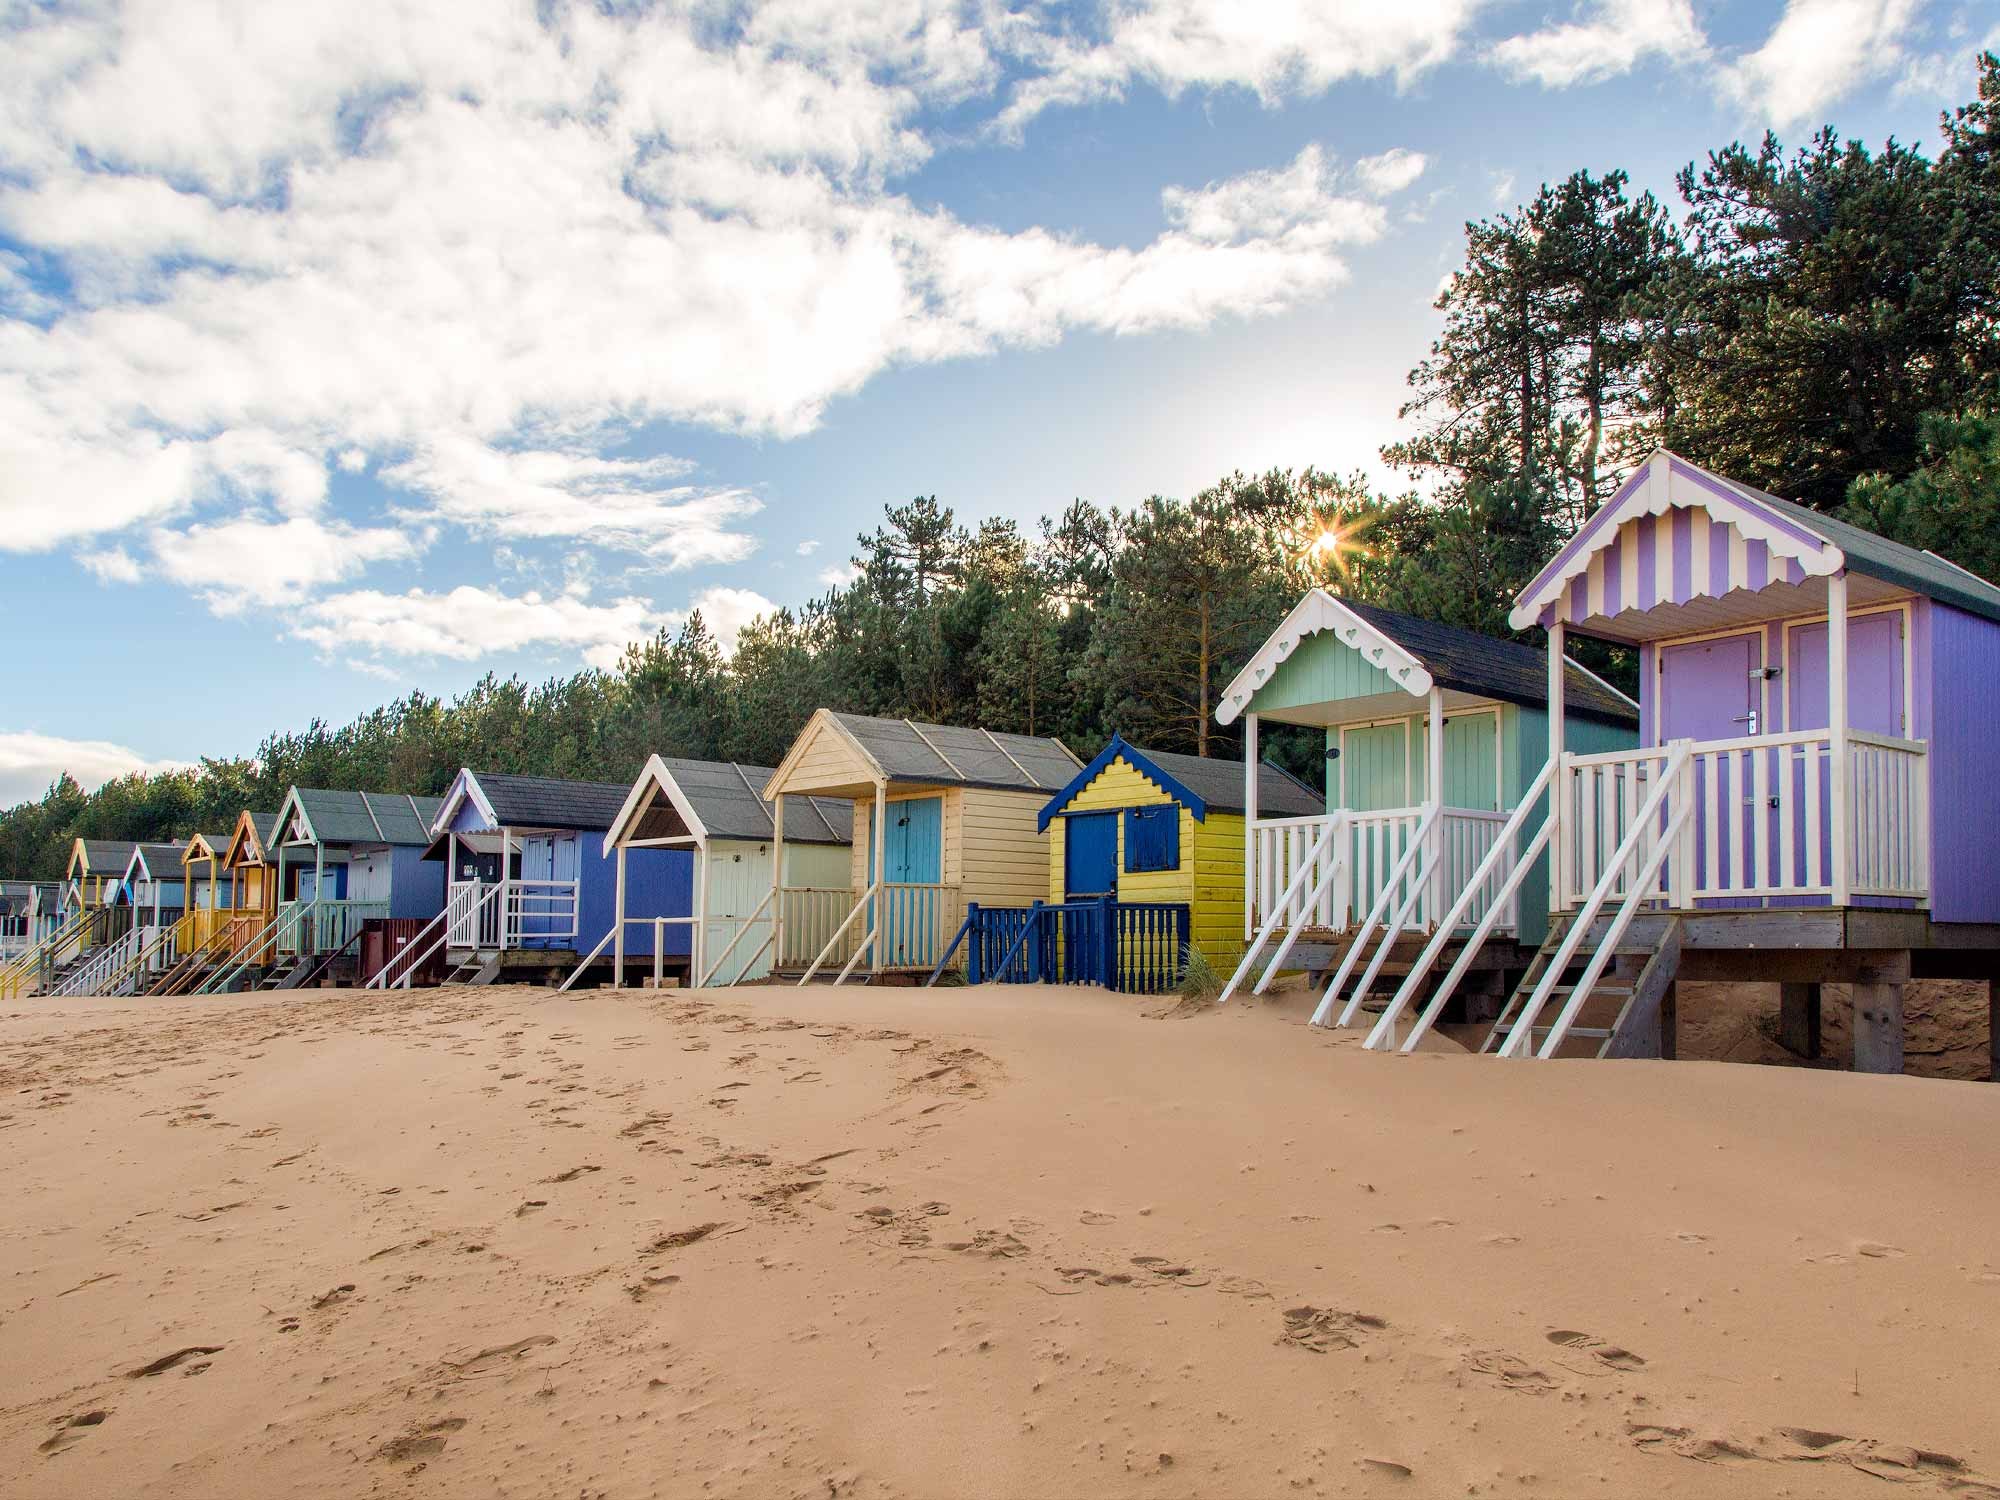 Wells-next-the-sea beach huts